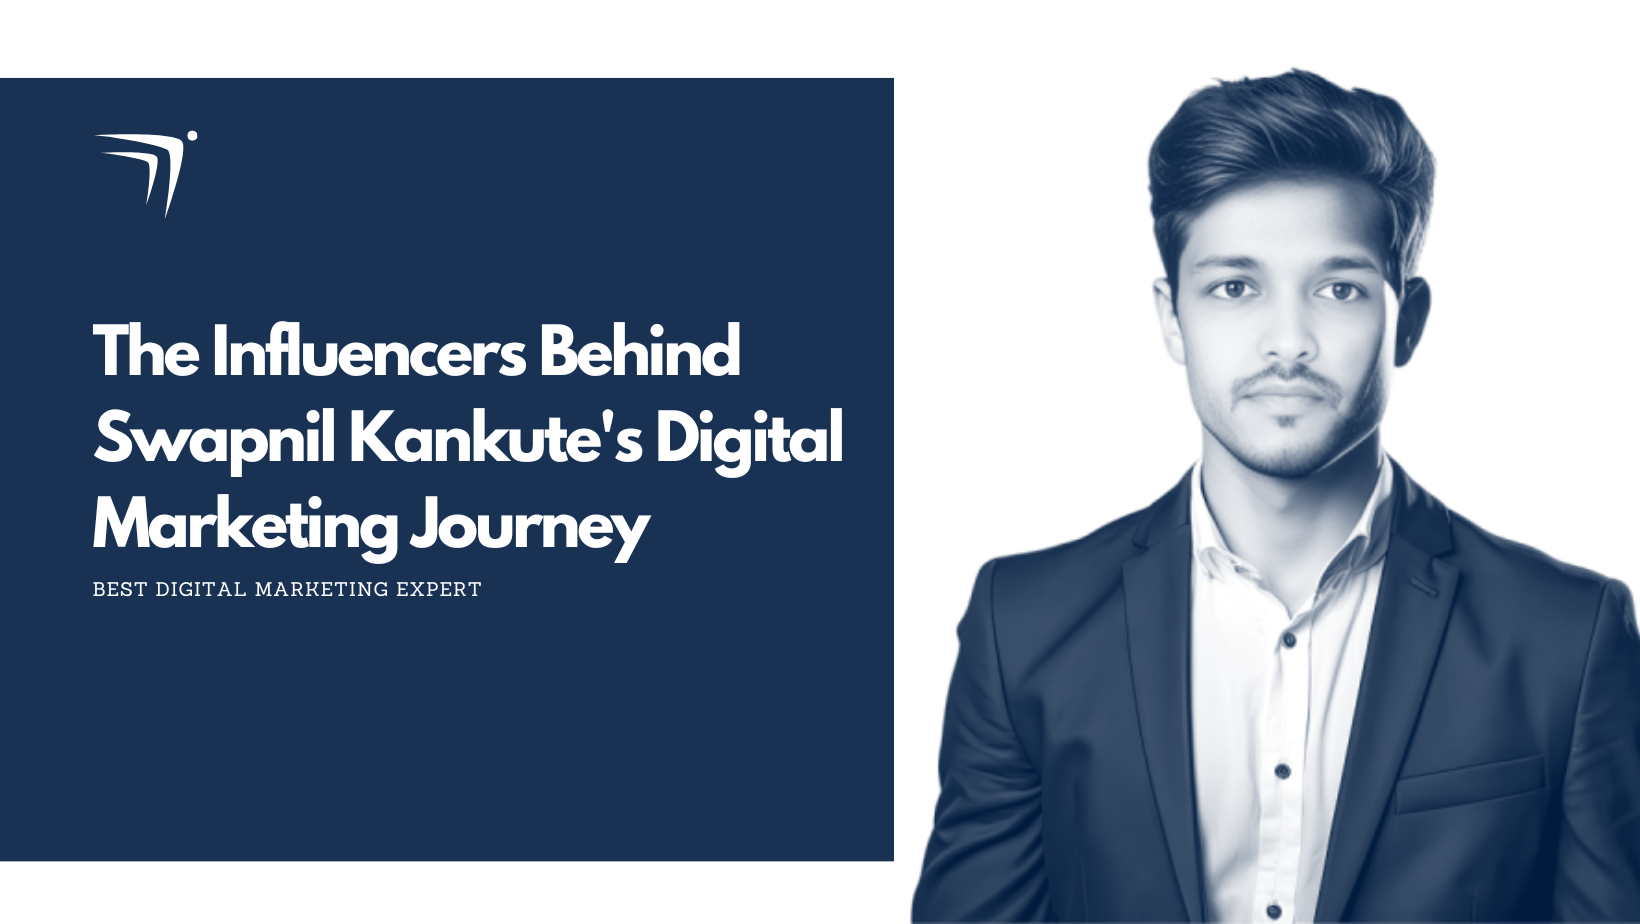 The Influencers Behind Swapnil Kankute’s Digital Marketing Journey